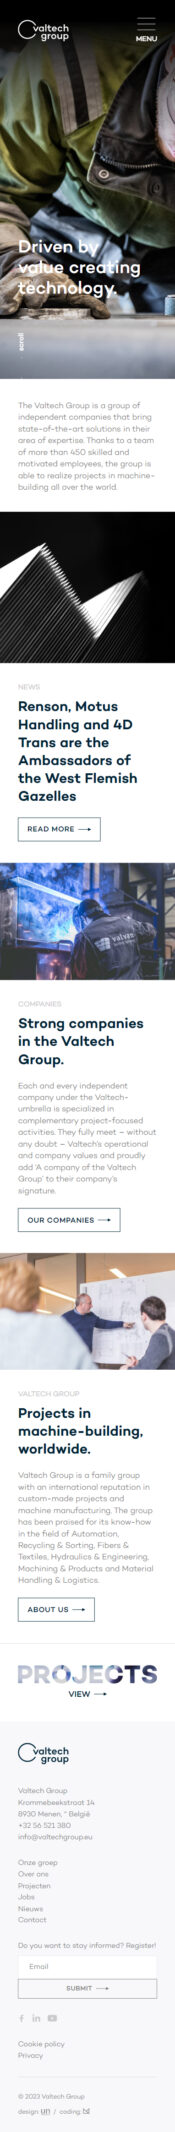 Valtech group